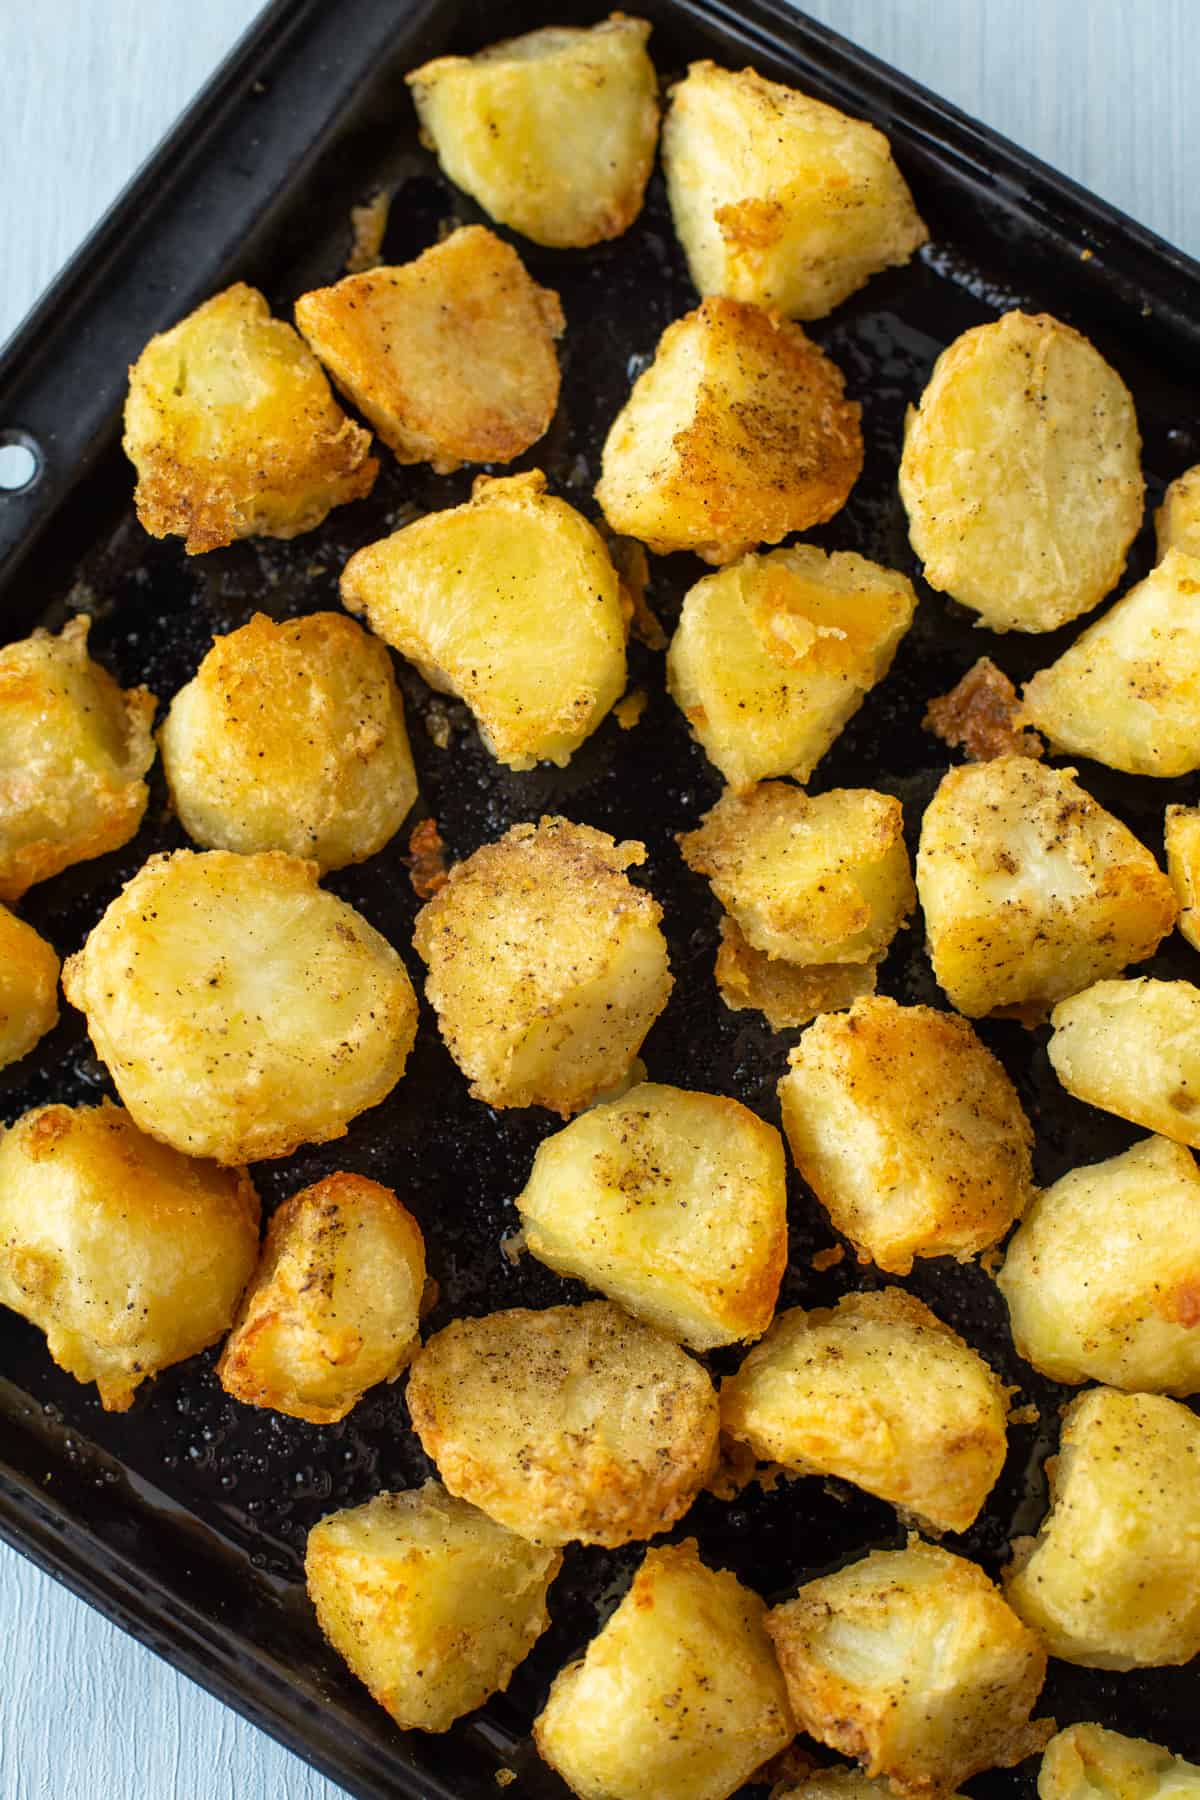 A baking tray full of crispy, golden brown roast potatoes.